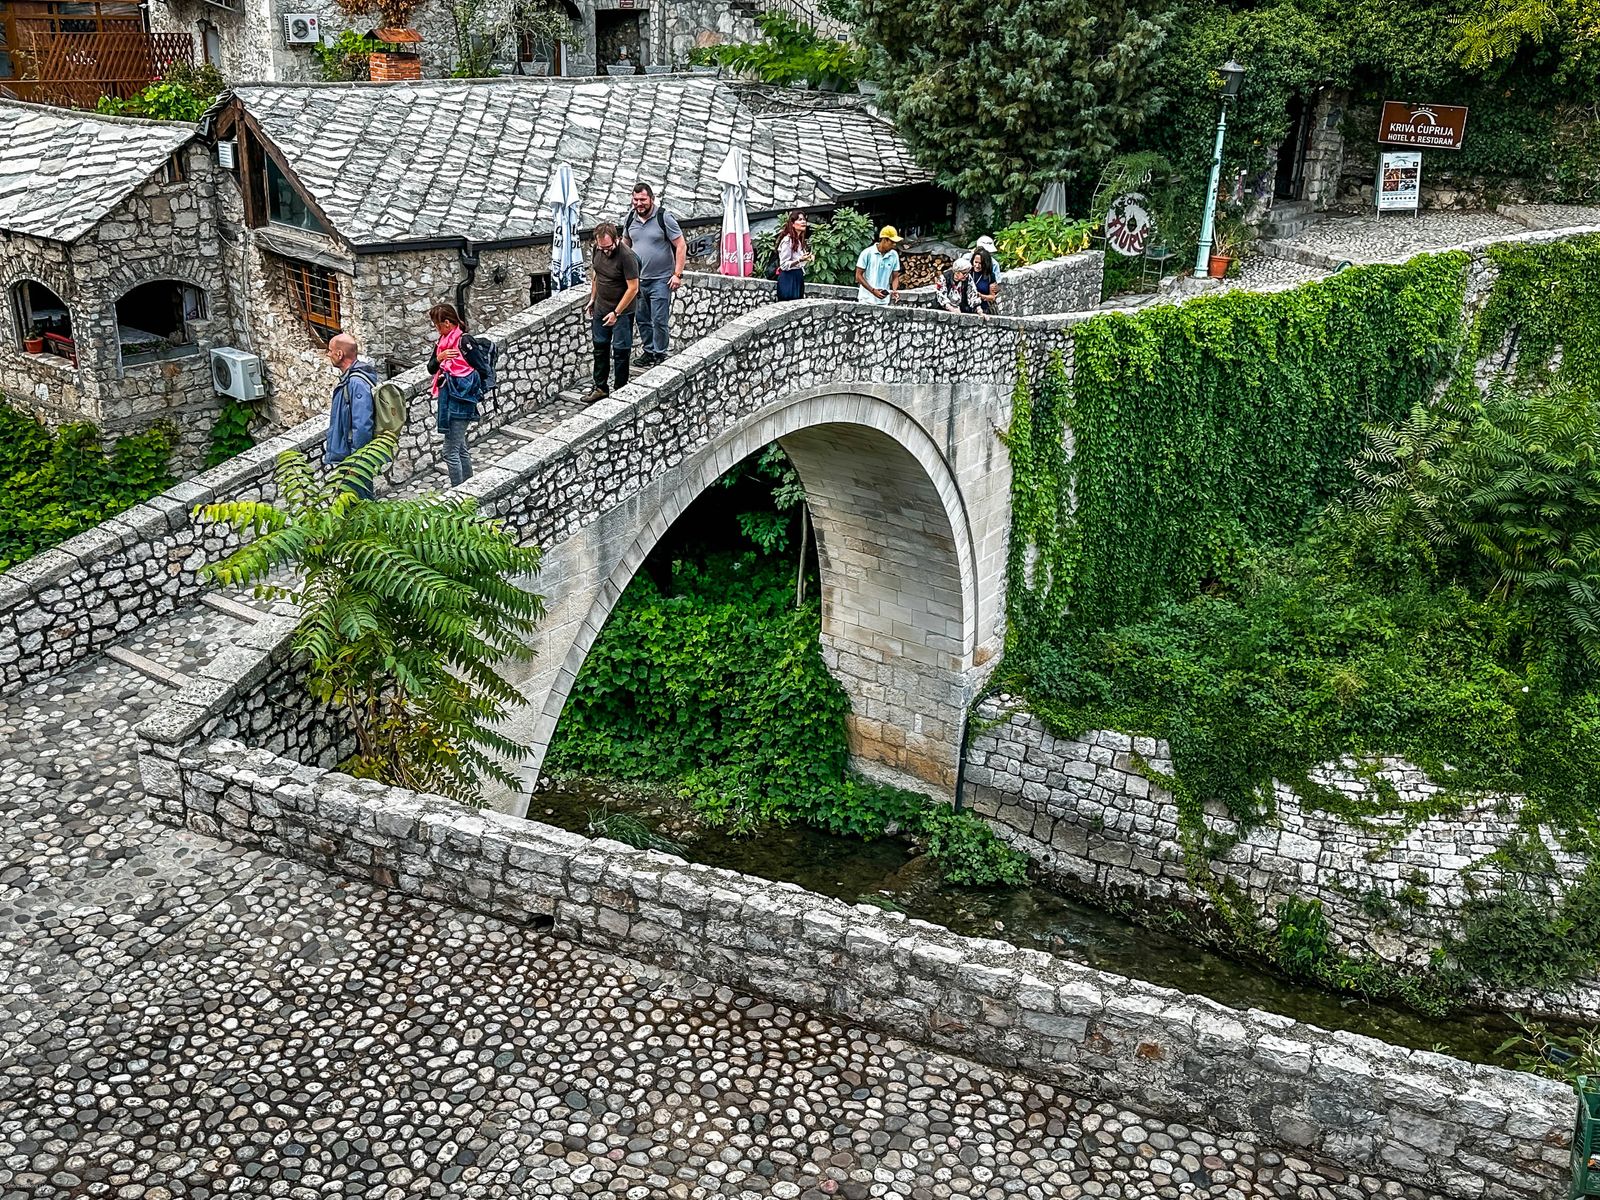 One Day In Mostar Bosnia - Crooked Bridge